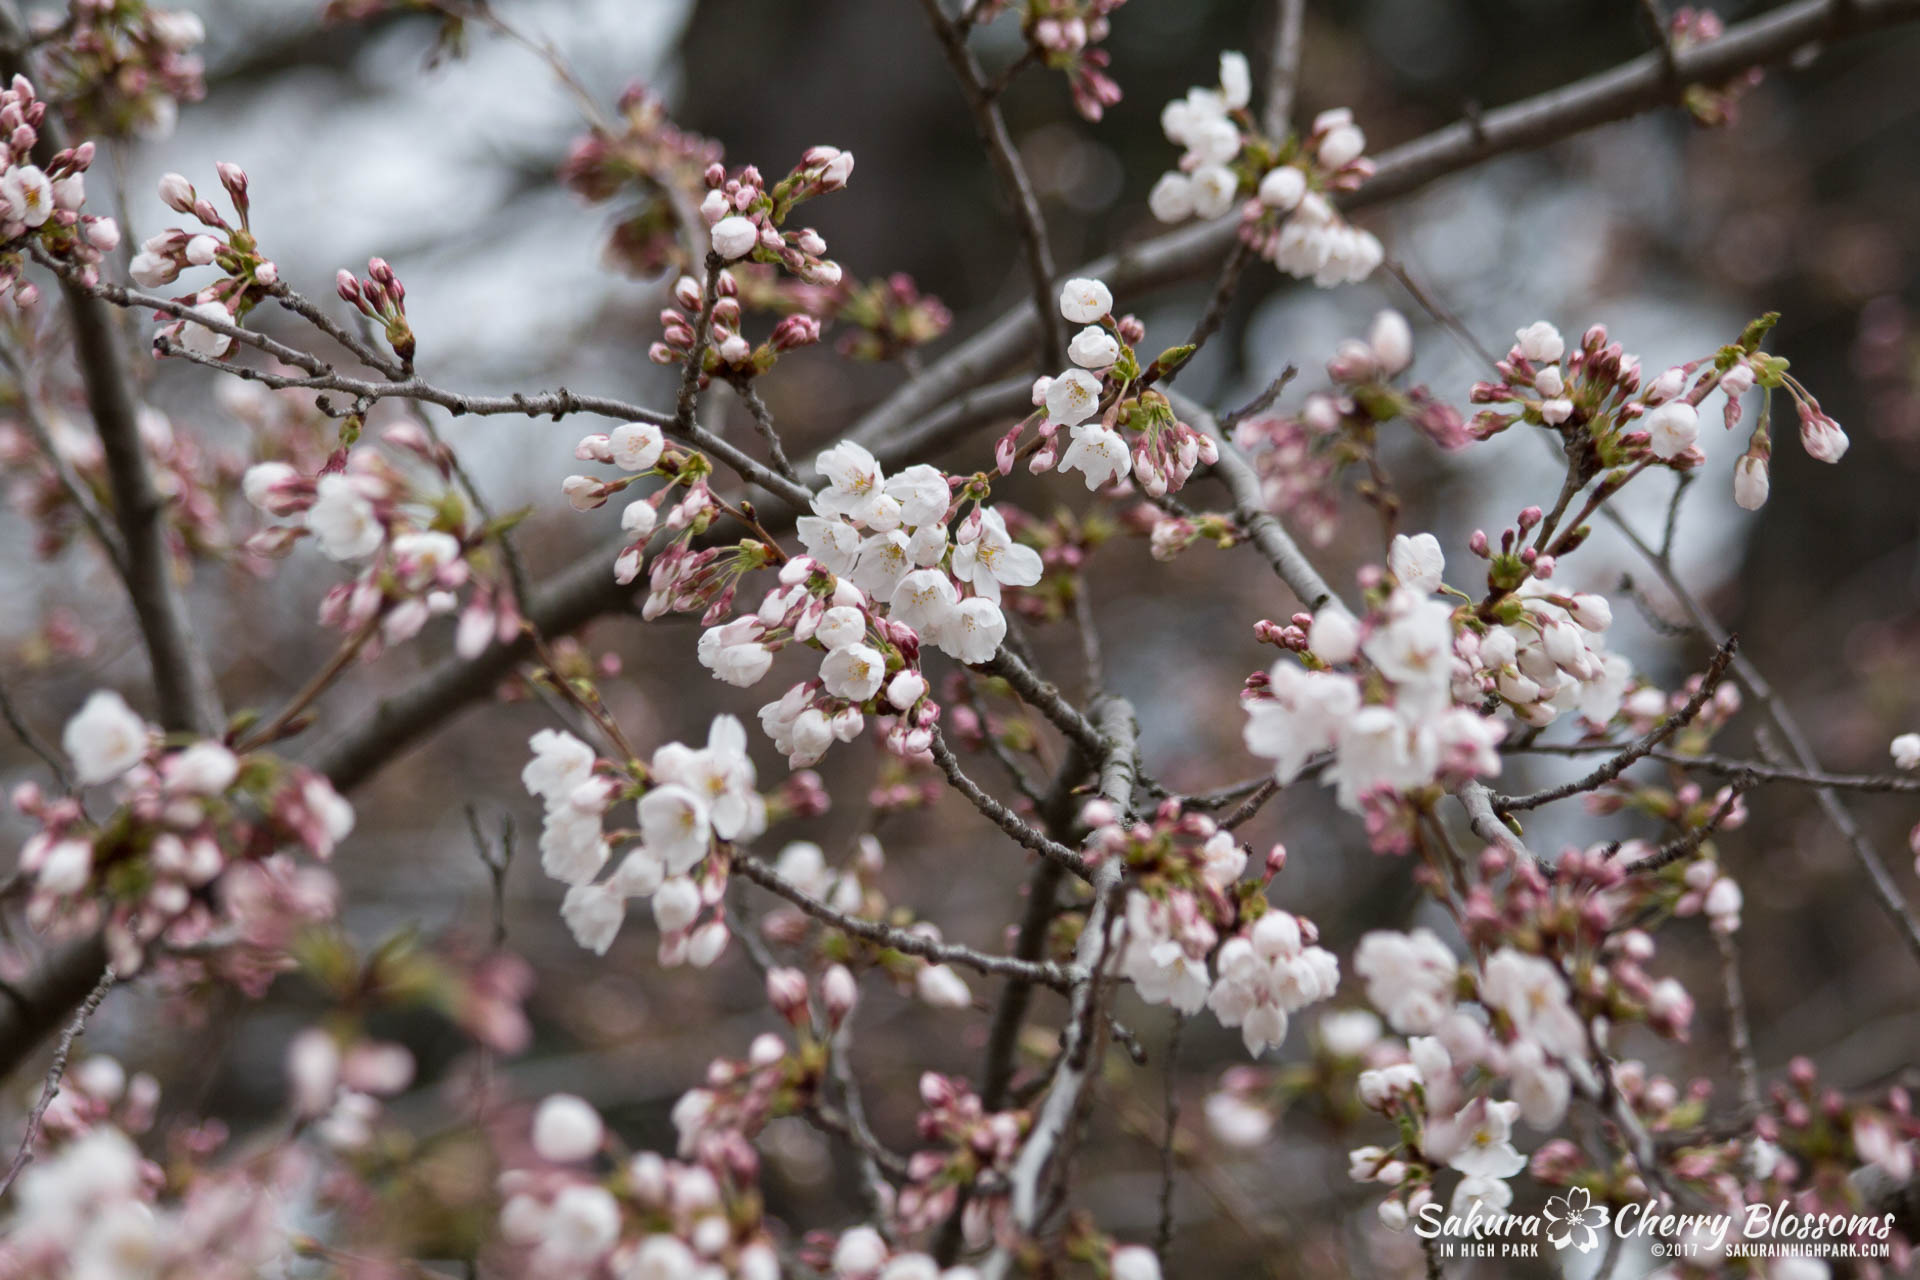 Sakura-Watch-April-21-2017-bloom-still-in-early-stages-23.jpg